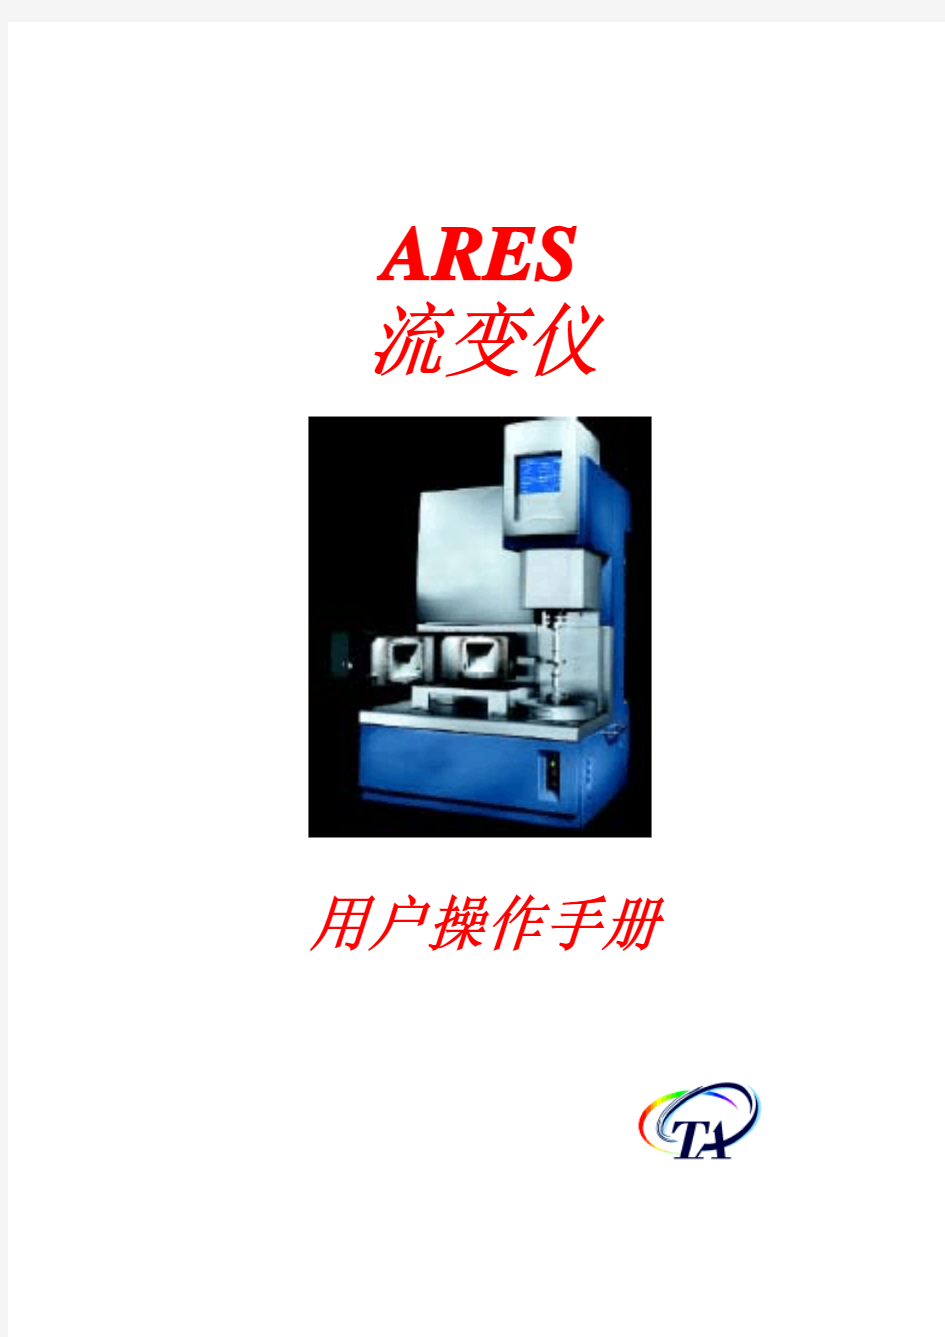 ARES用户操作手册